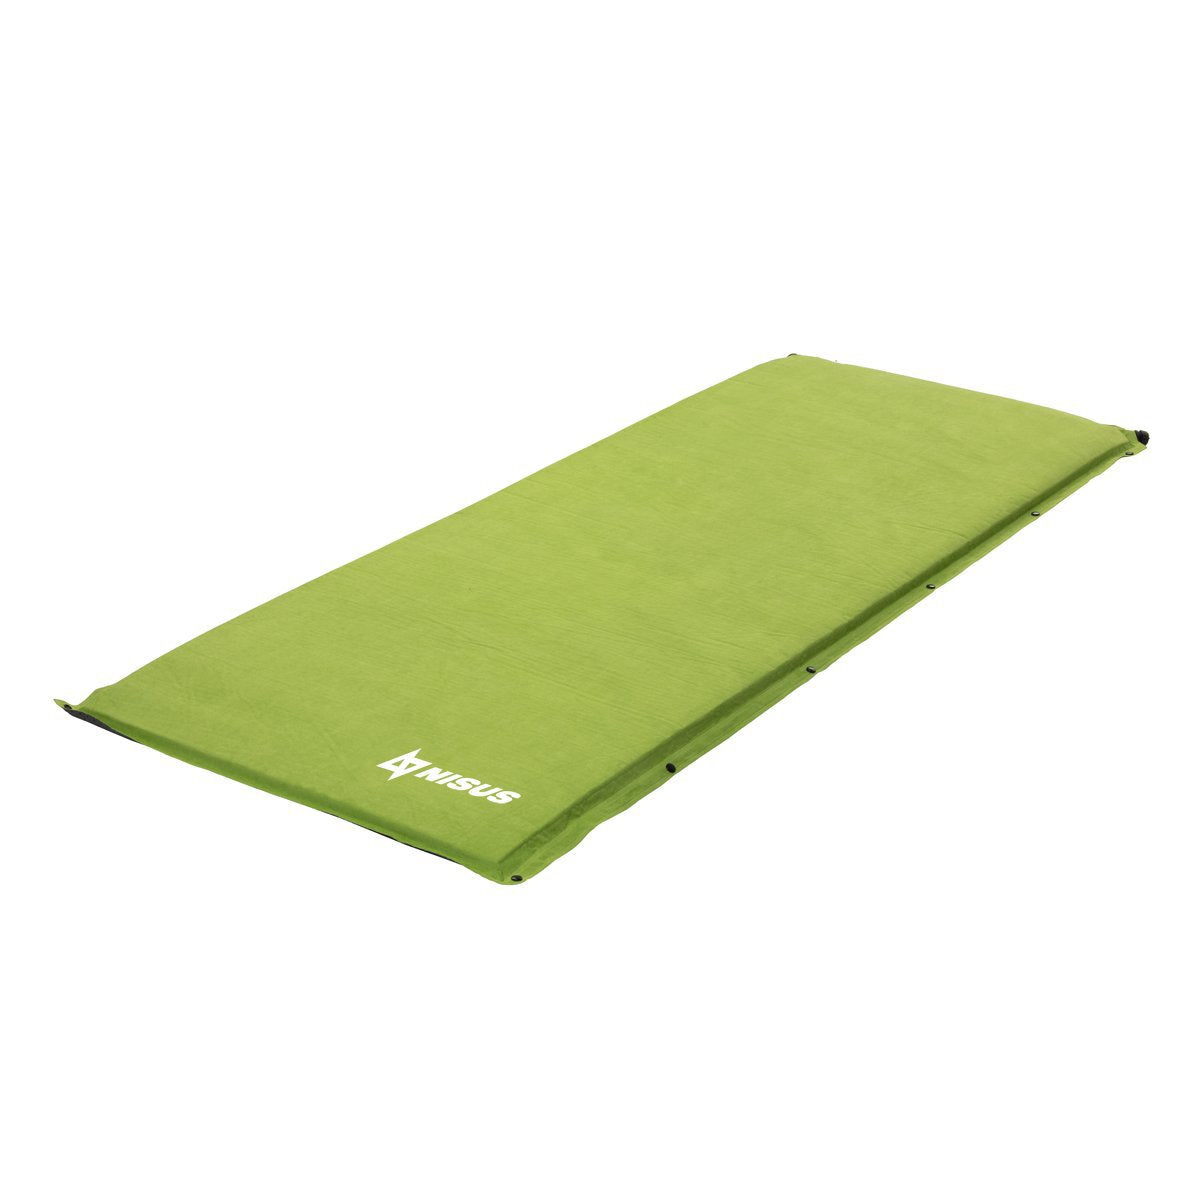 2-inch Lightweight Self Inflating Camping Sleeping Pad, Green